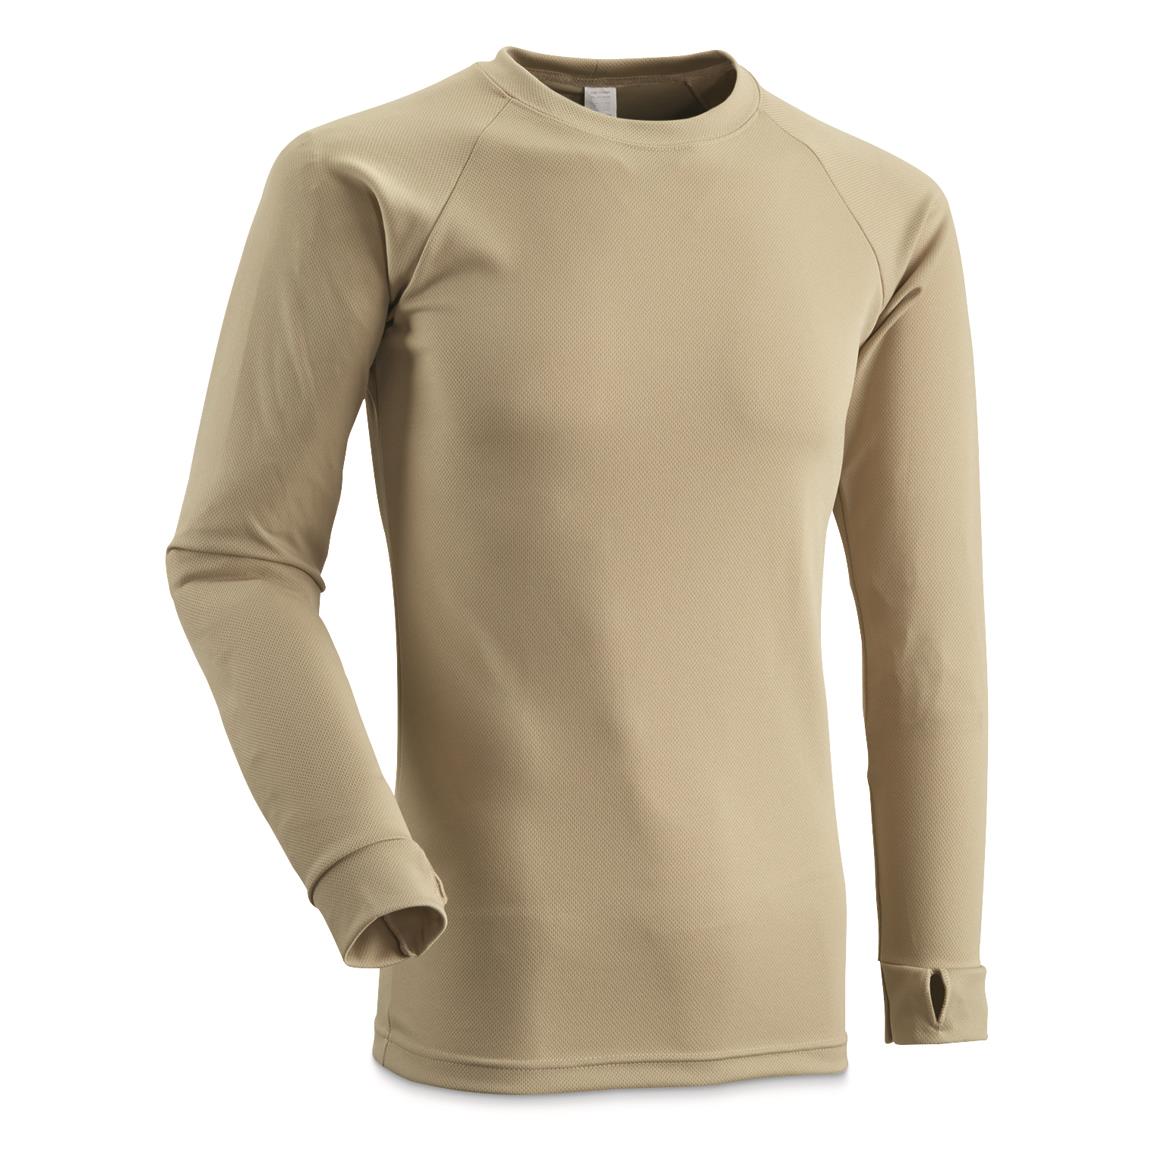 U.S. Military Surplus Midweight Base Layer Long Sleeve Shirt, New, Sand